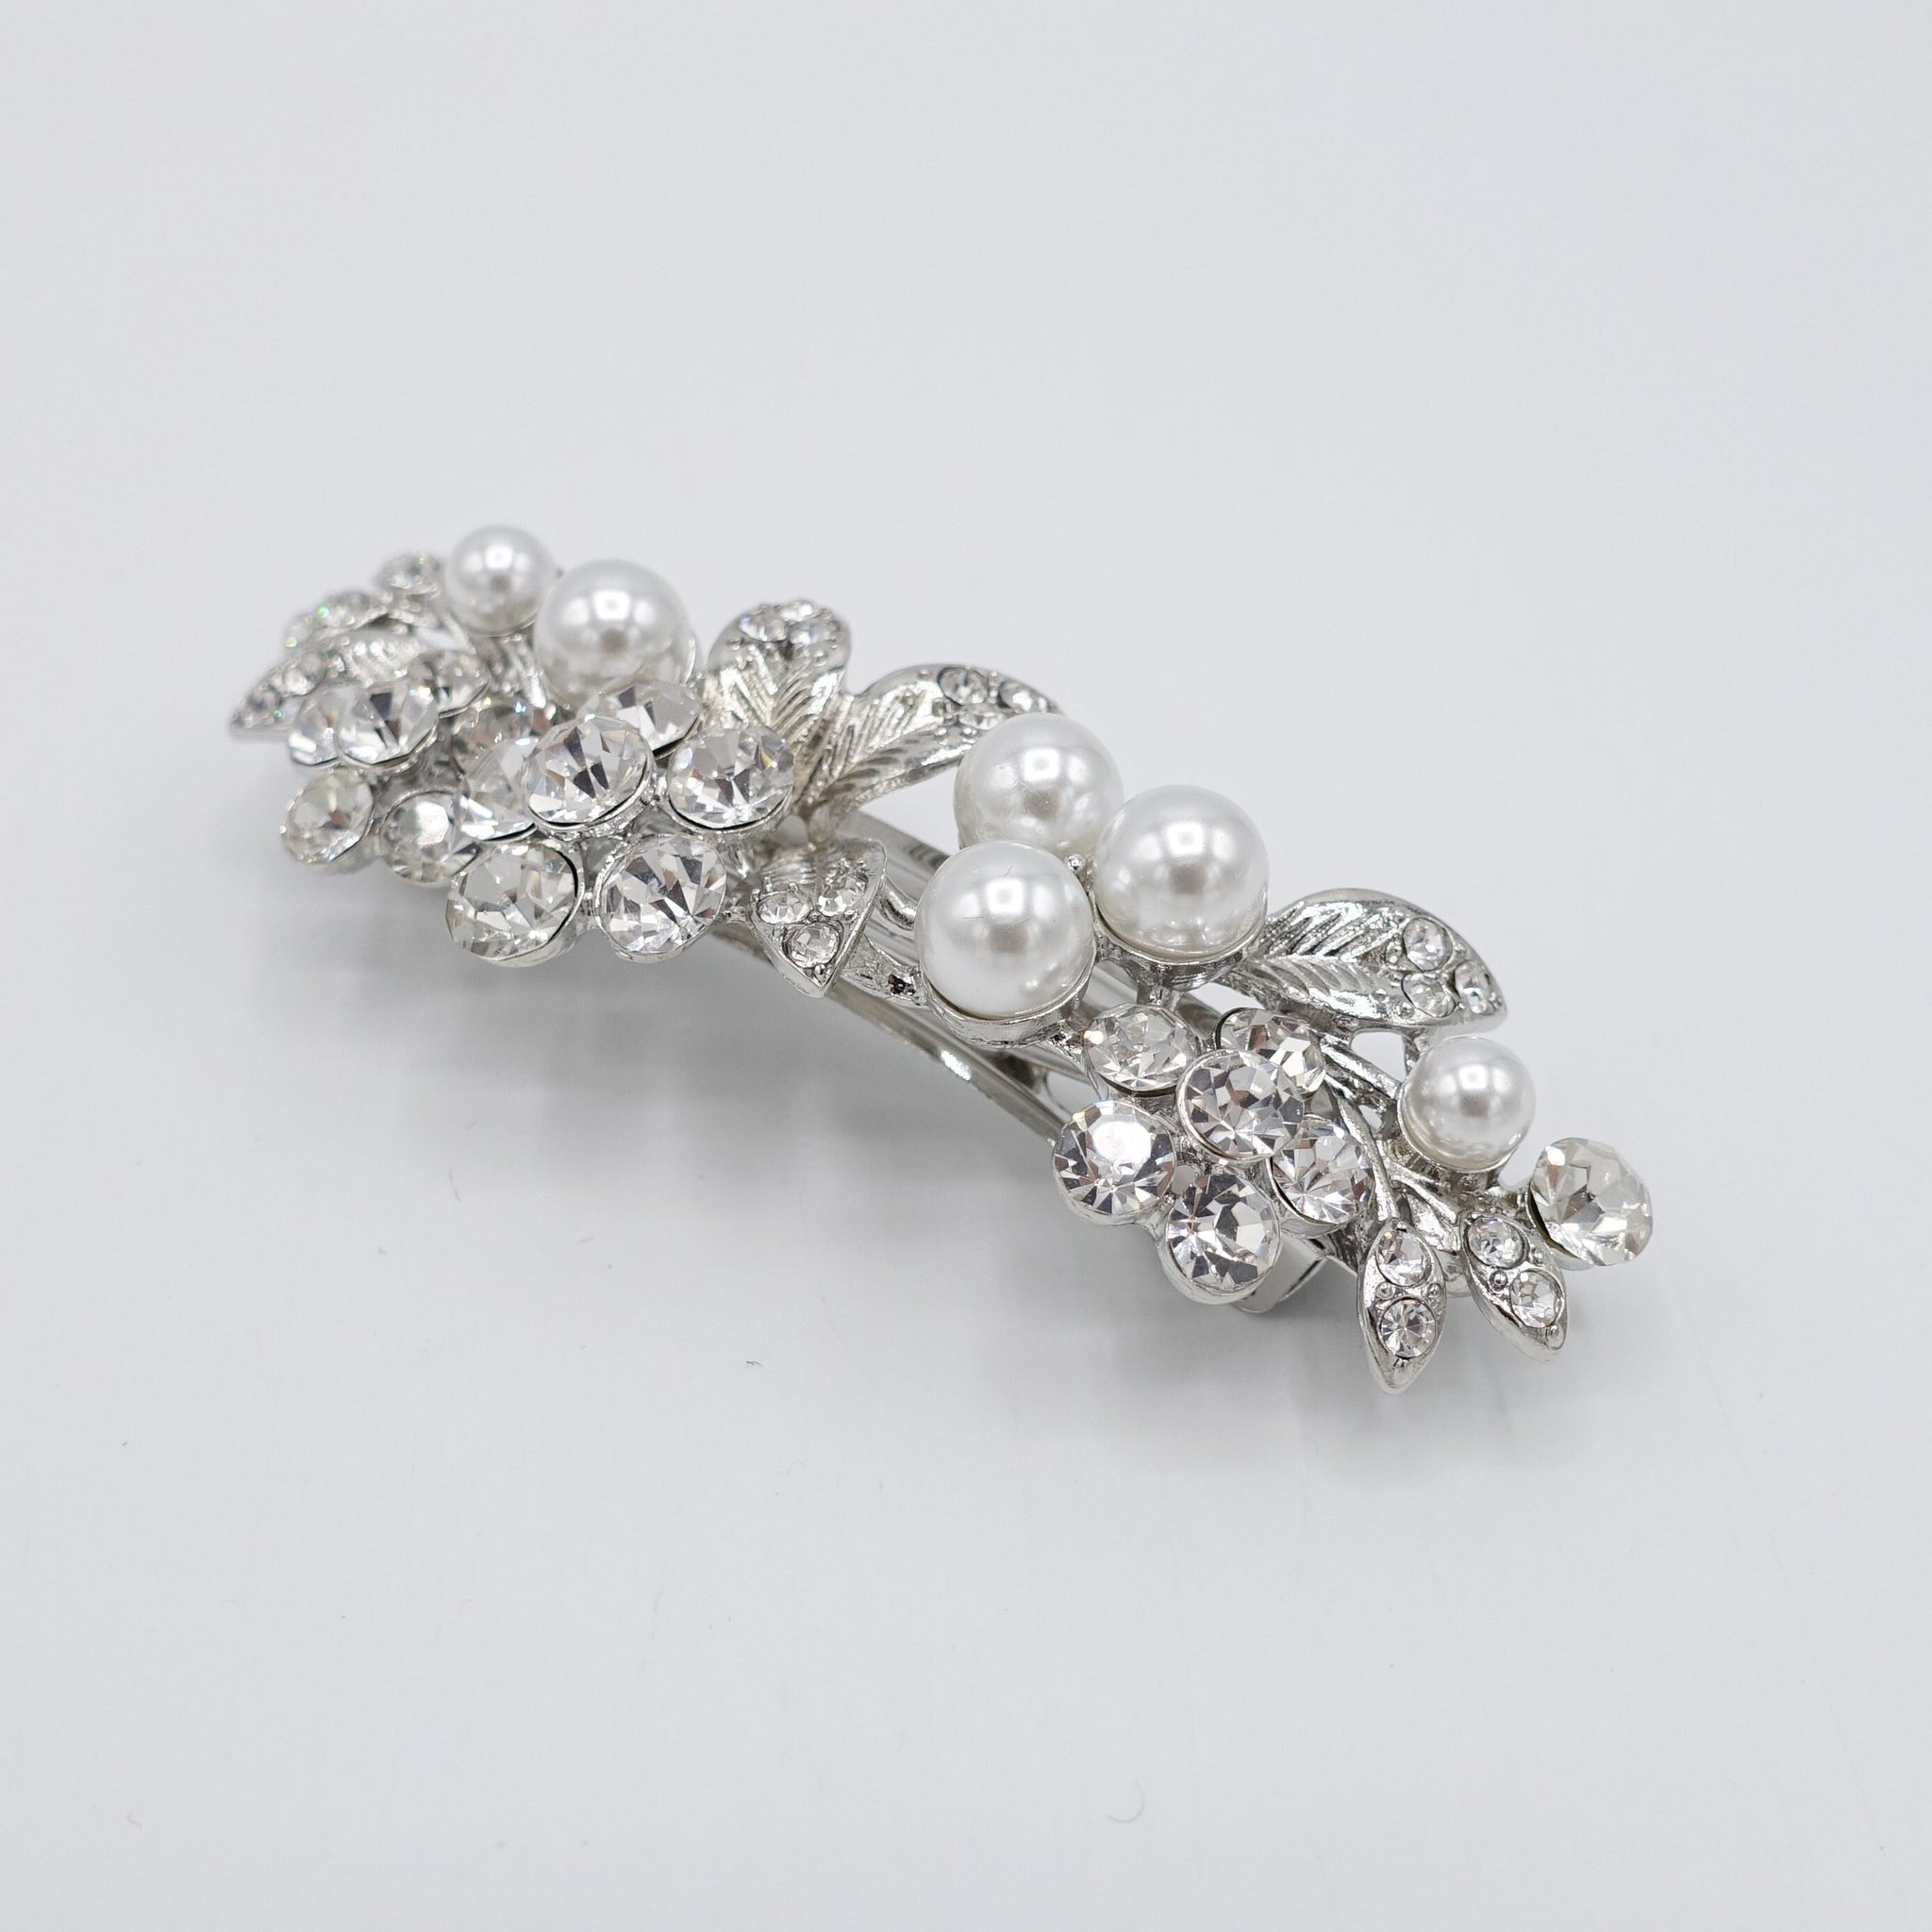 VeryShine bridal branch hair barrette rhinestone pearl hair accessory for women